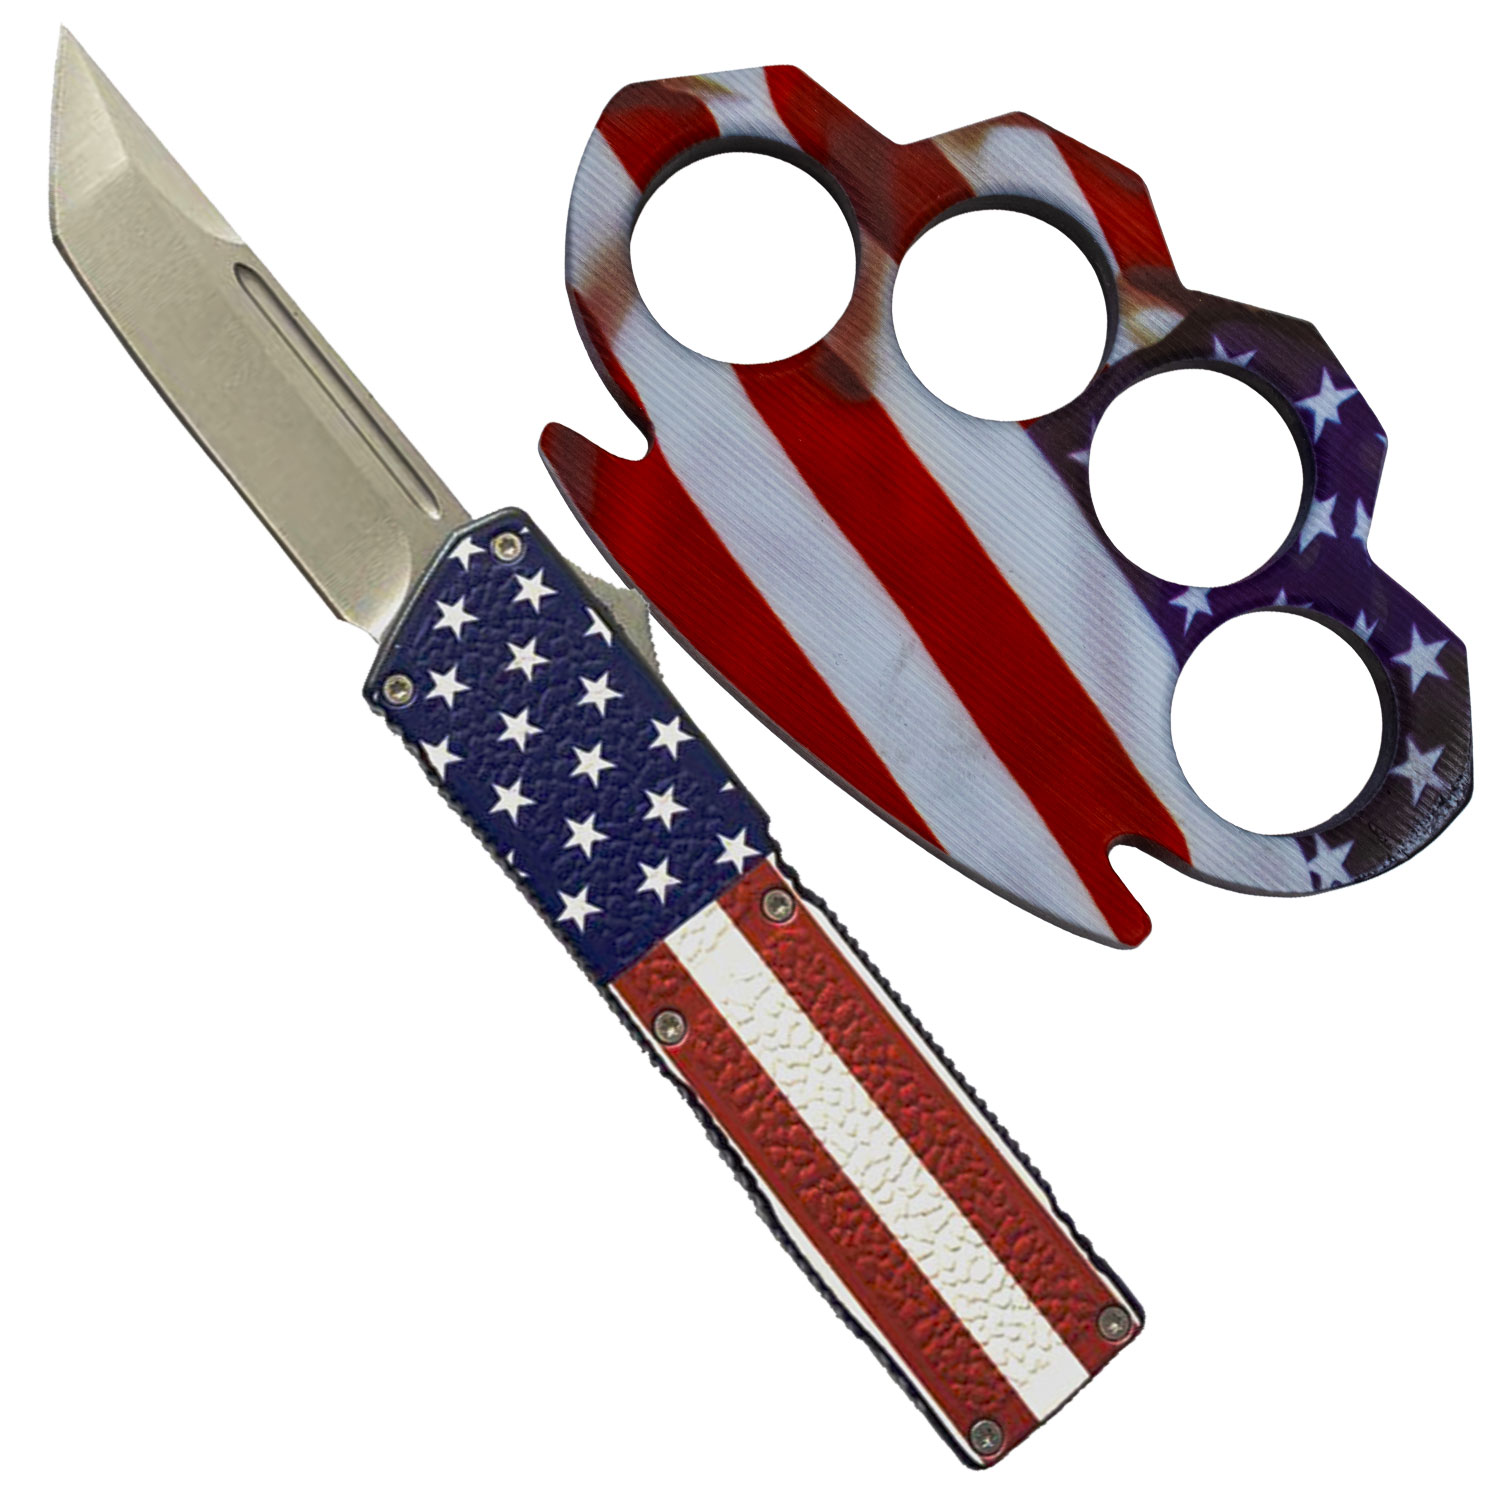 We Are America Lightning Knife and Brass Knuckle Flag Set